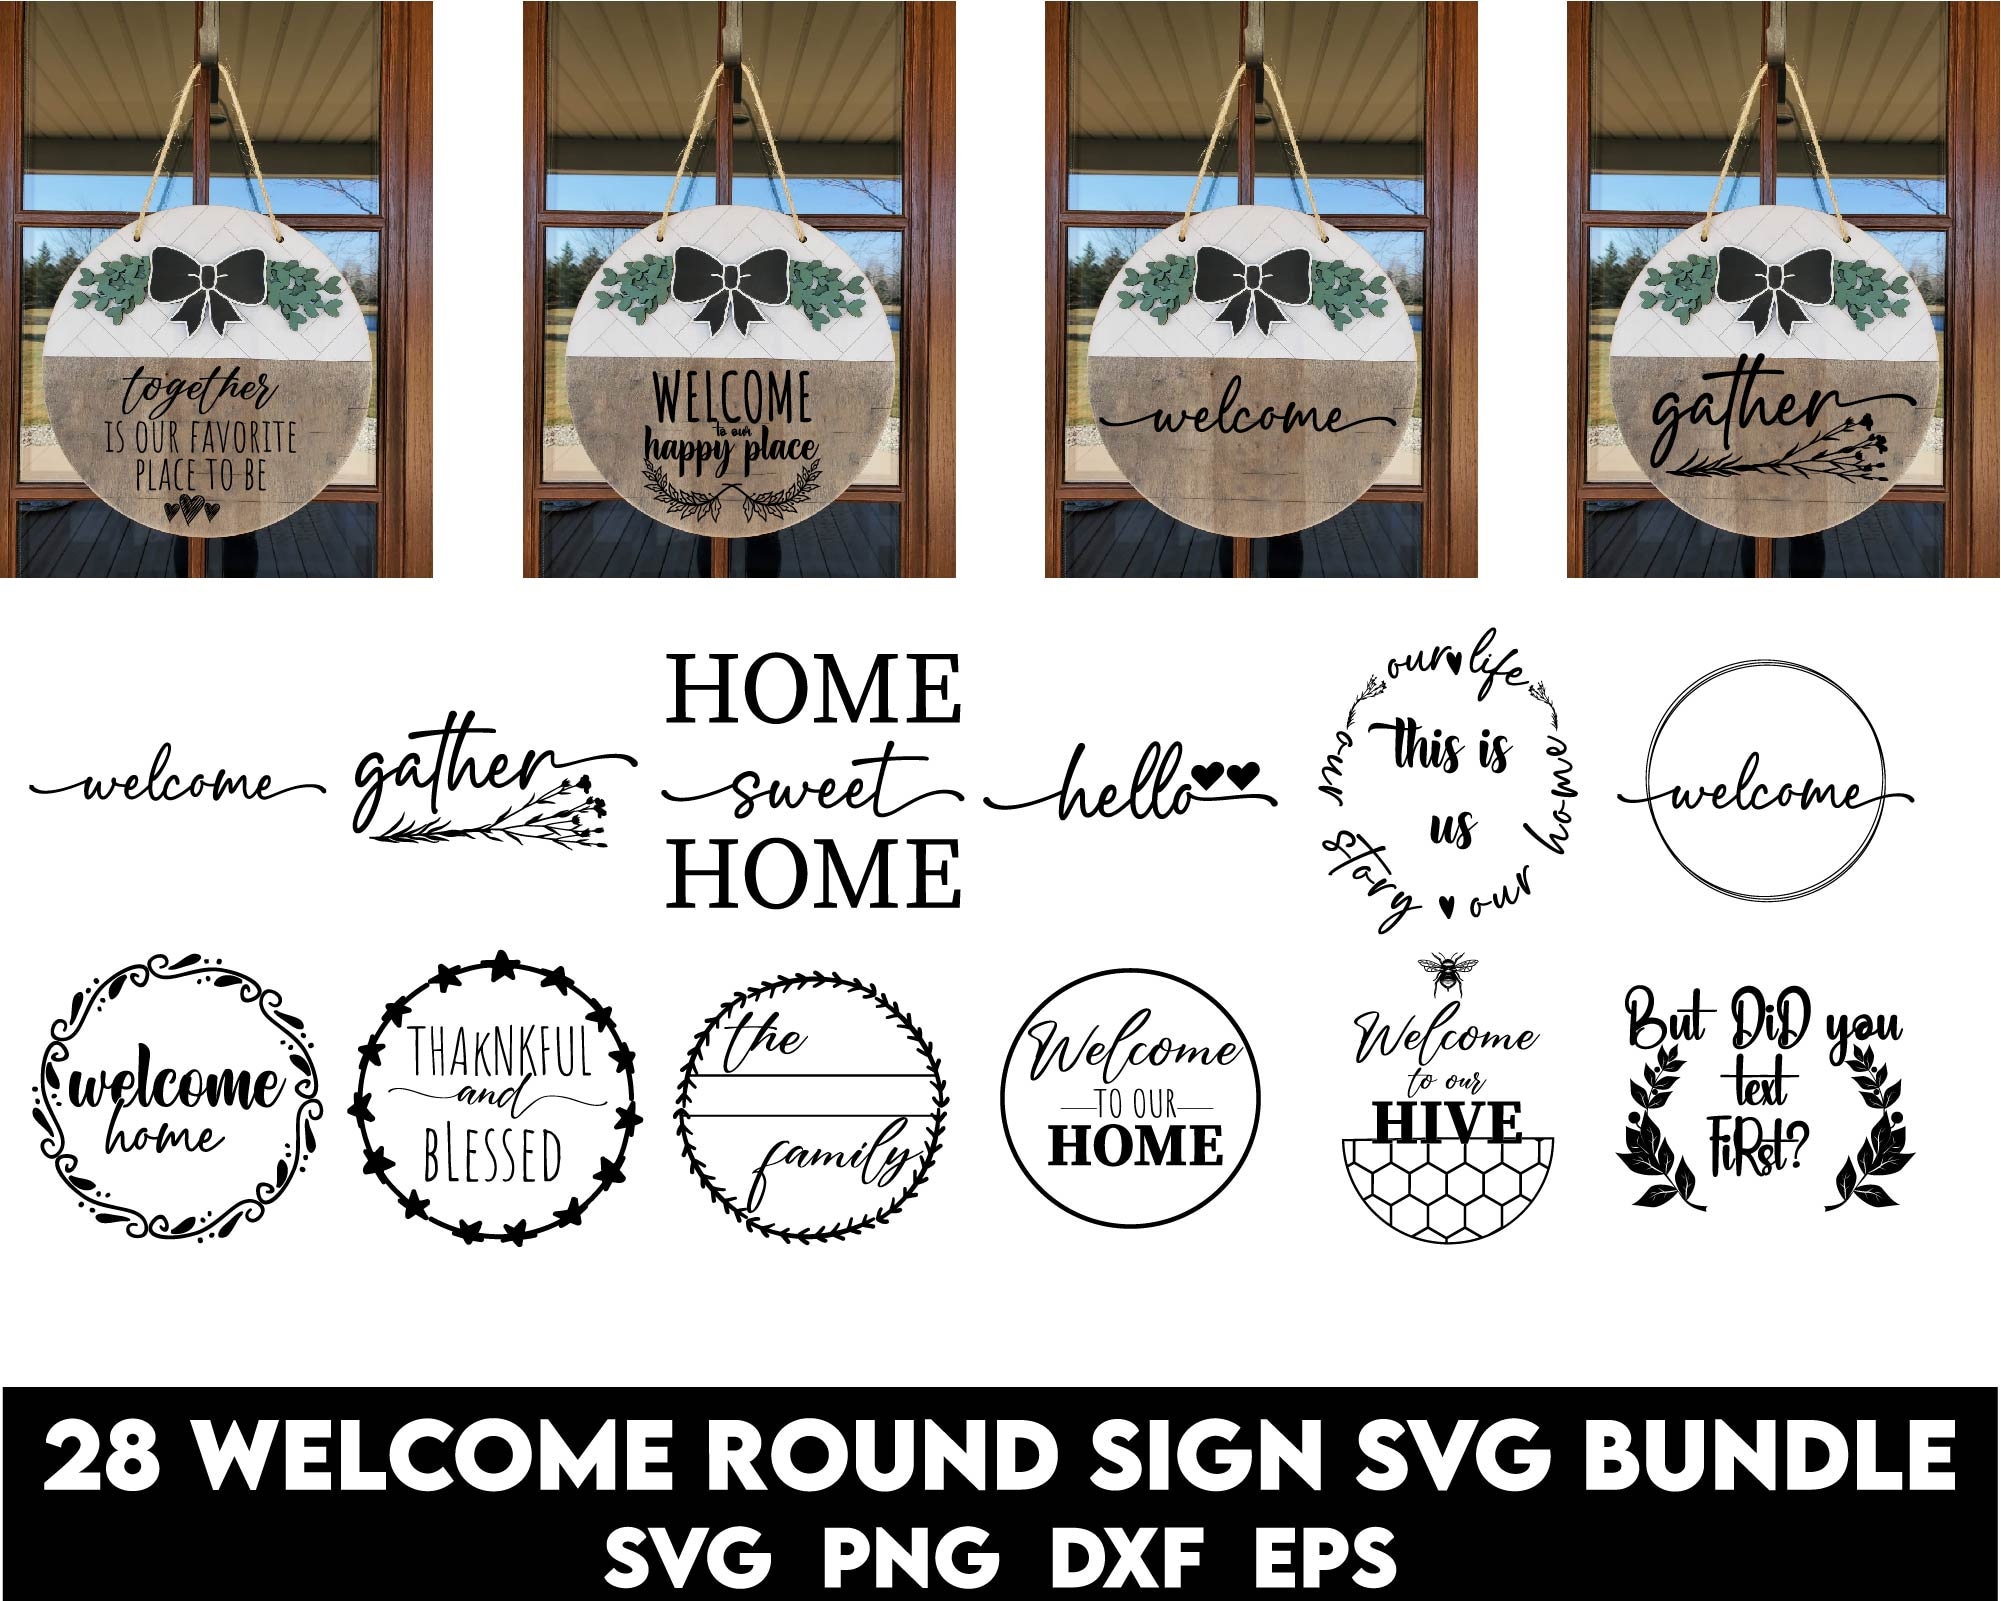 Designer Stencils Family - Welcome - Gather Sign Stencil Fs020, Clear